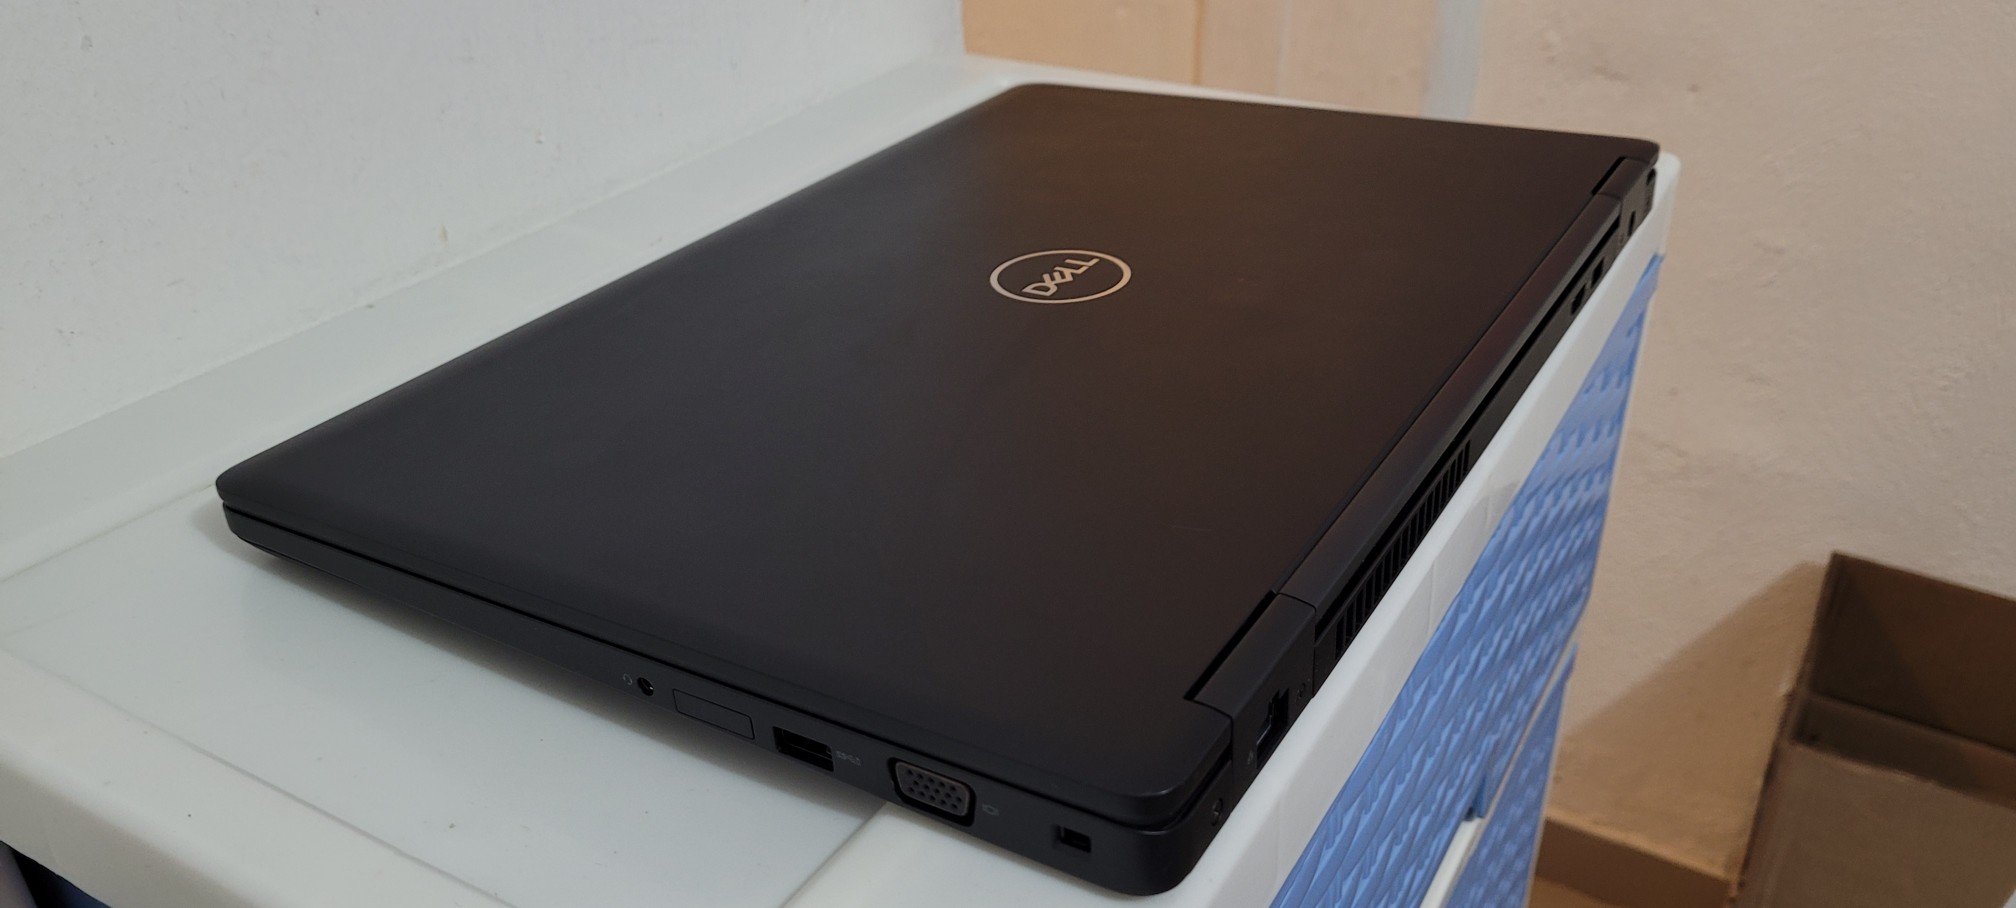 computadoras y laptops - Dell 5580 17 Pulg Core i5 7ma Gen Ram 8gb Disco 128gb Solido 2